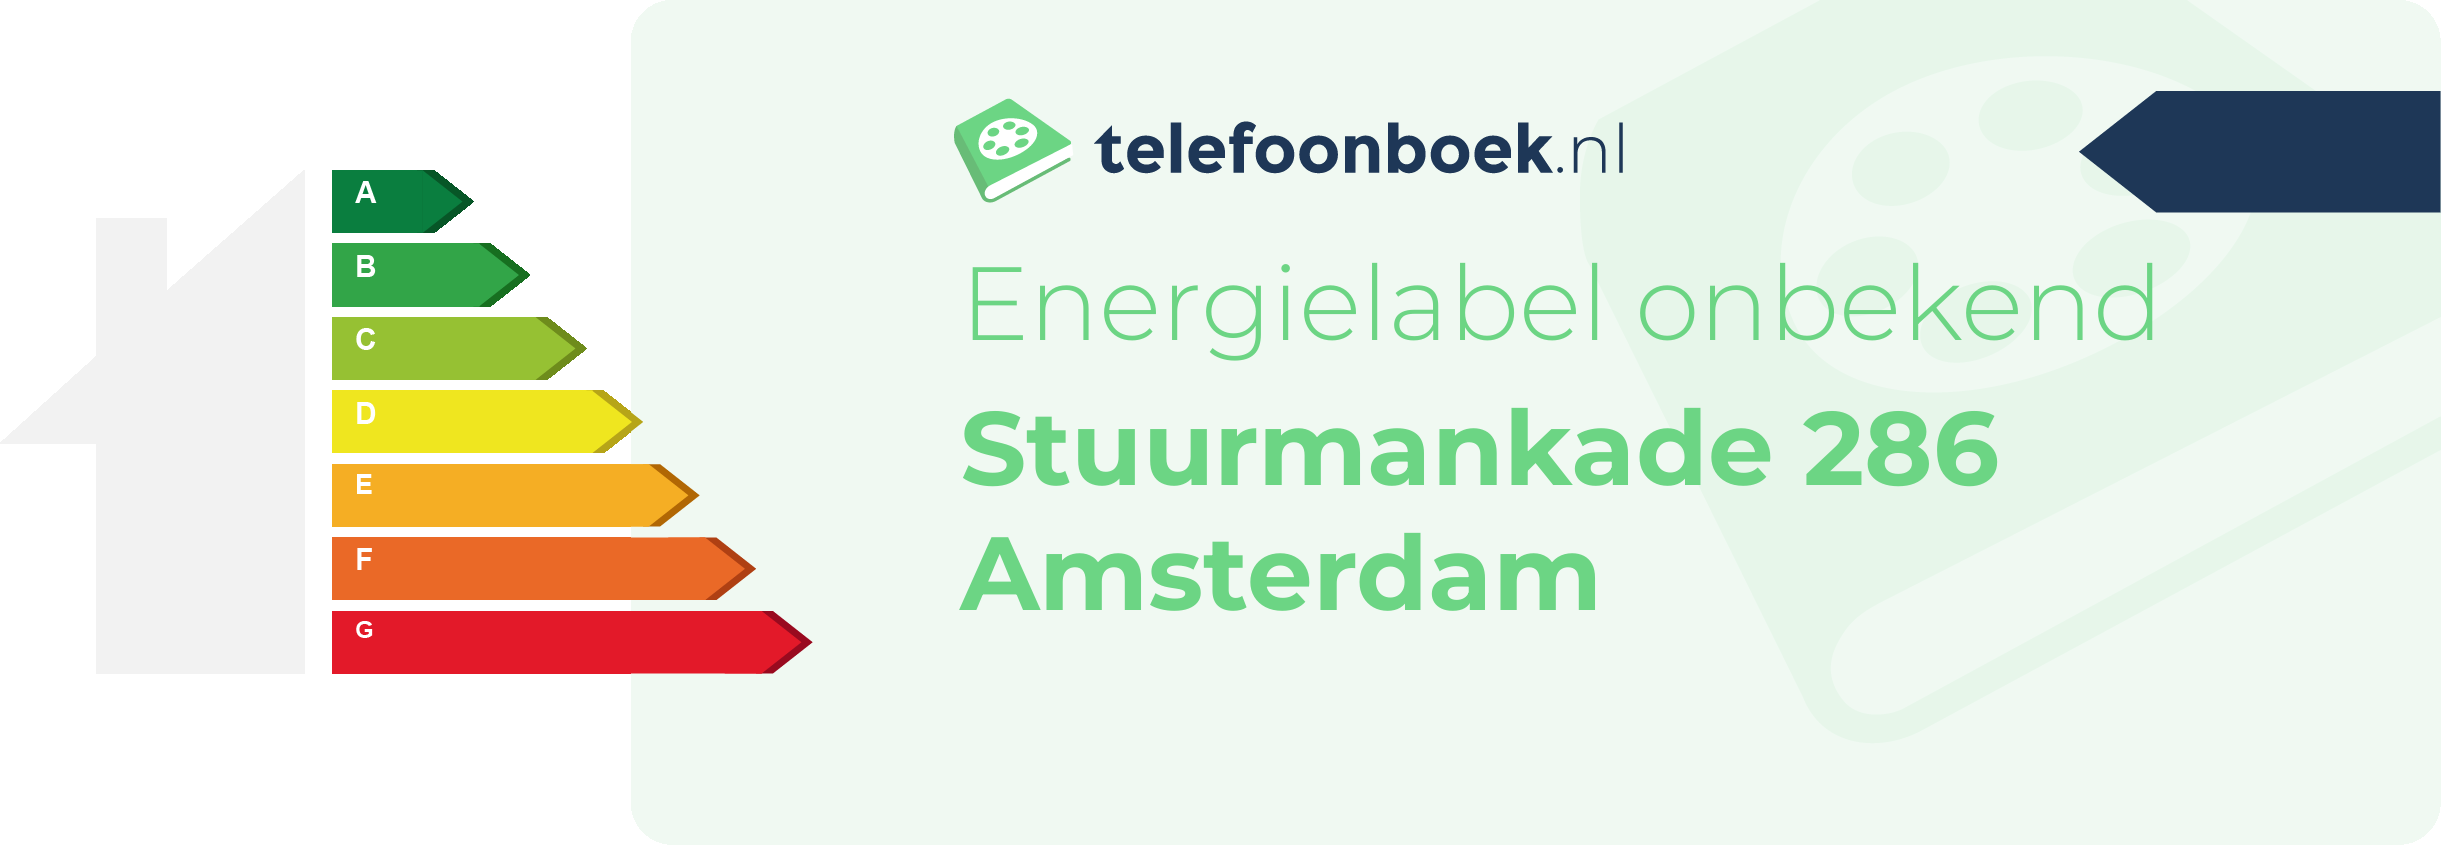 Energielabel Stuurmankade 286 Amsterdam